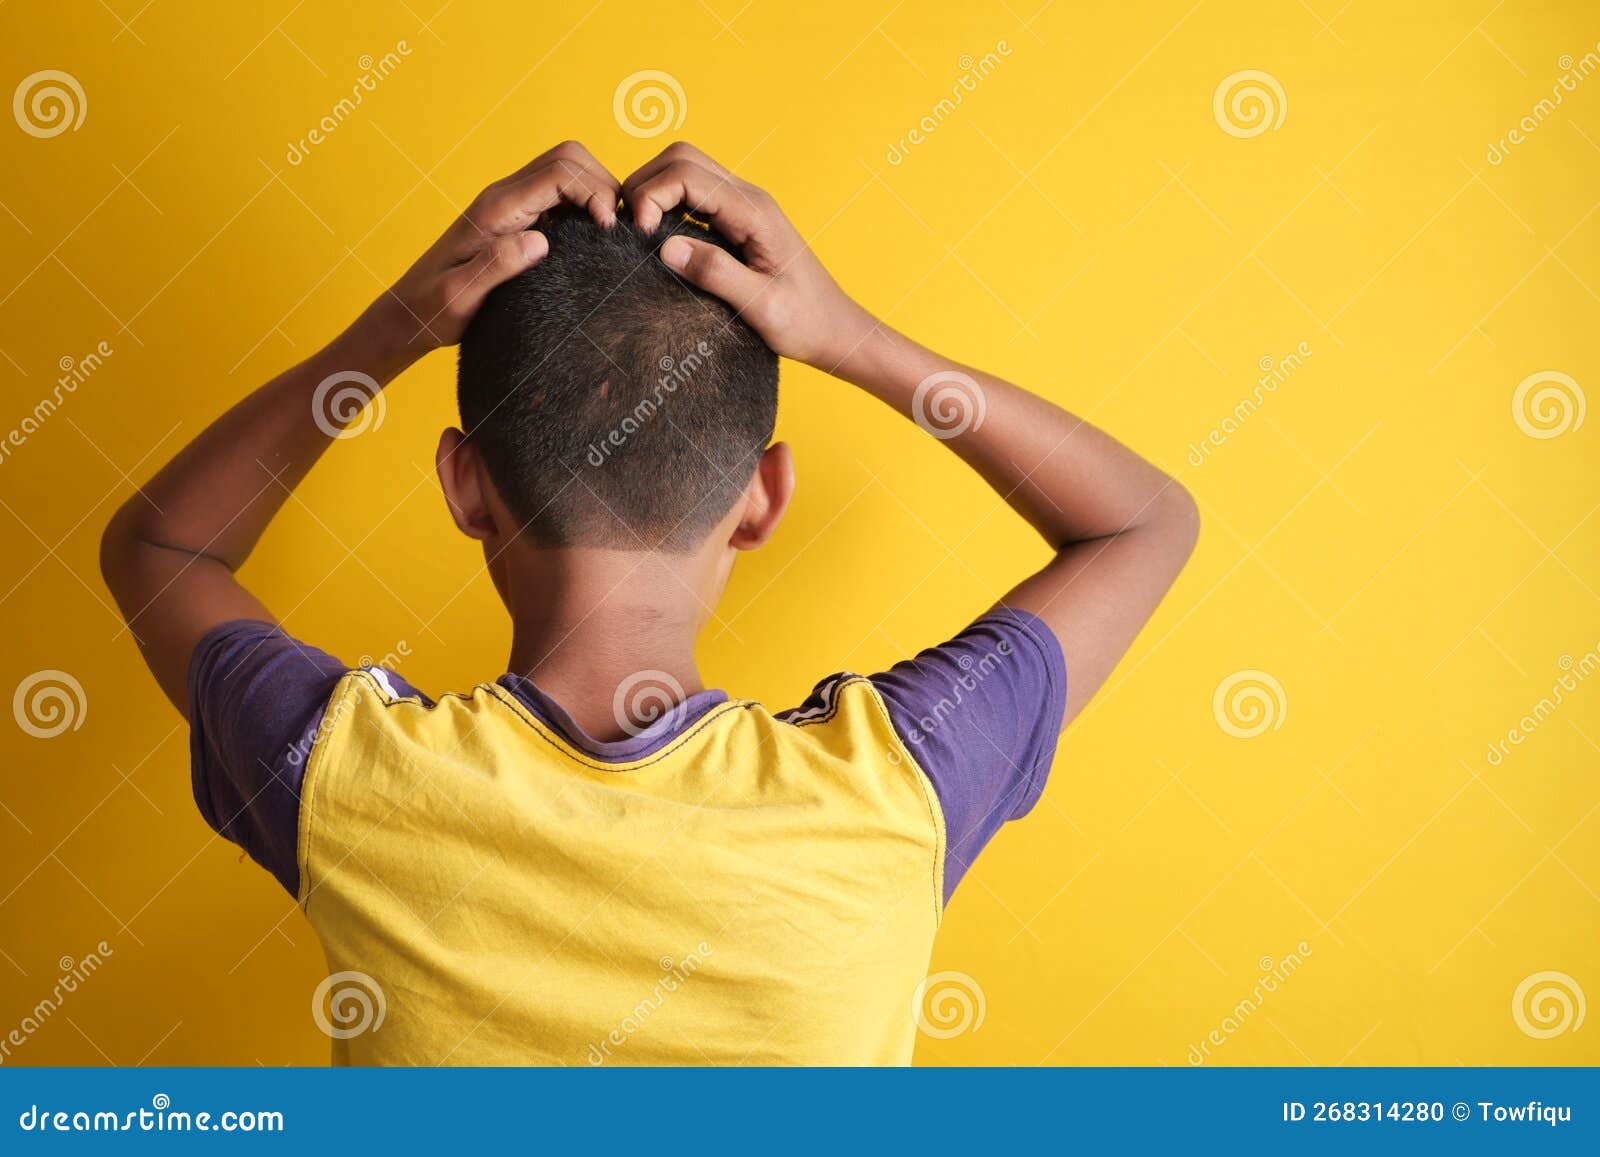 Sad Teenage Boy Covering His Face Sitting on Sofa Stock Photo - Image ...